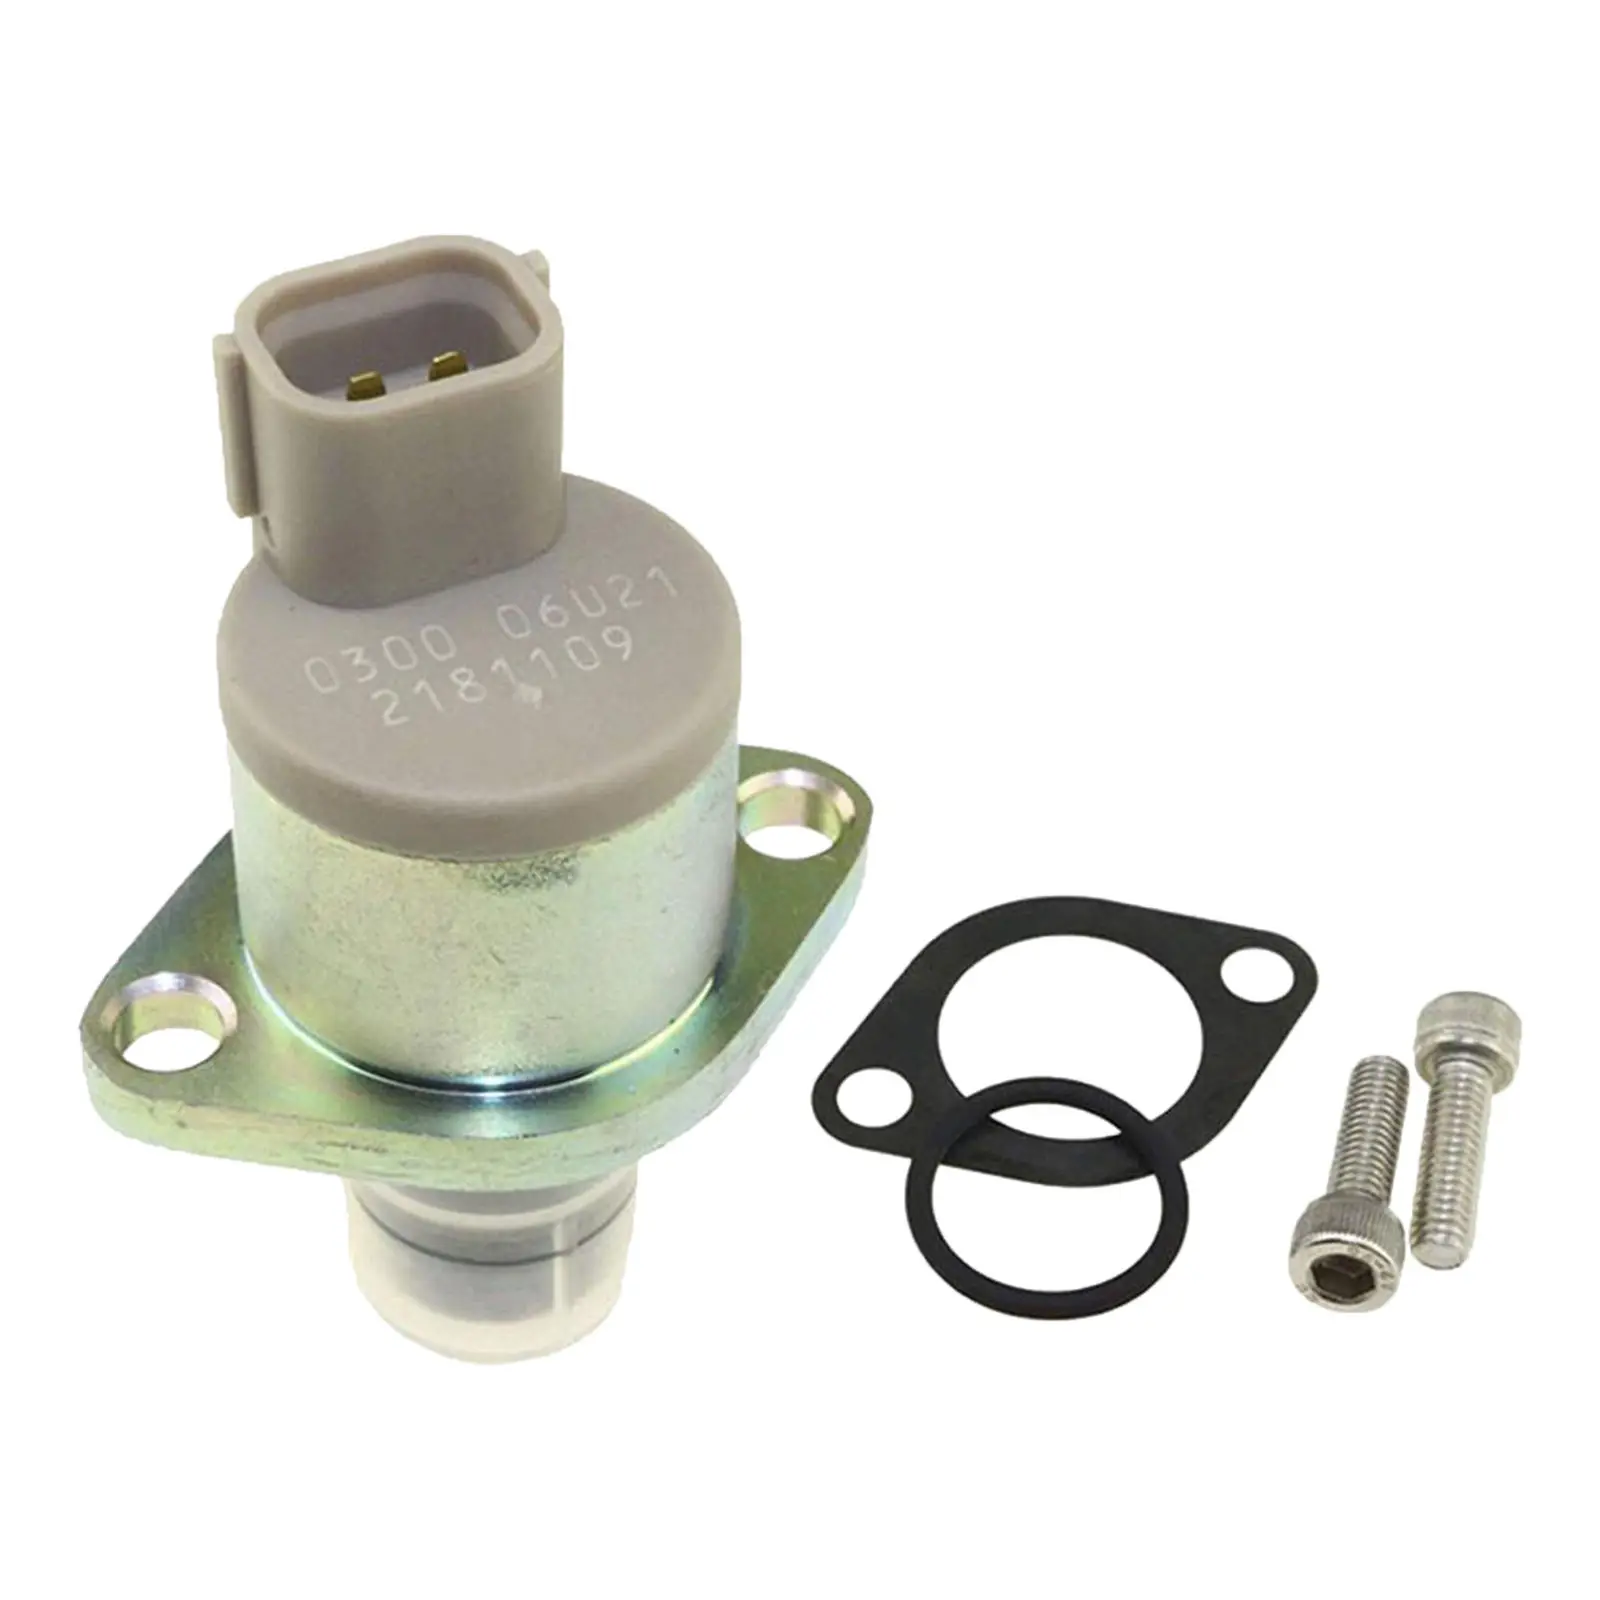 Fuel Suction Control Valve Pressure Fuel Pump Regulator Suction Control SCV Valve 294200-0300 Replace Acc 1 Pack